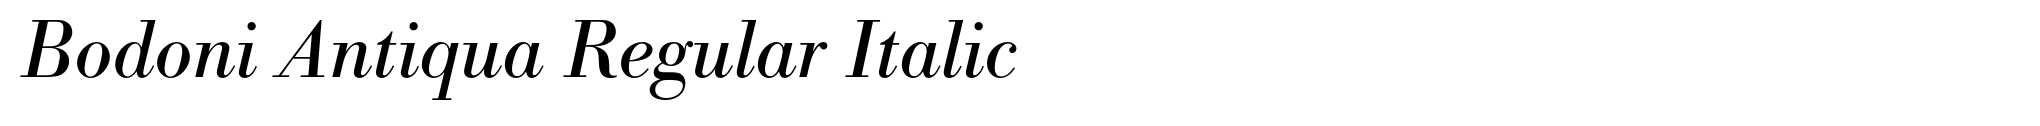 Bodoni Antiqua Regular Italic image